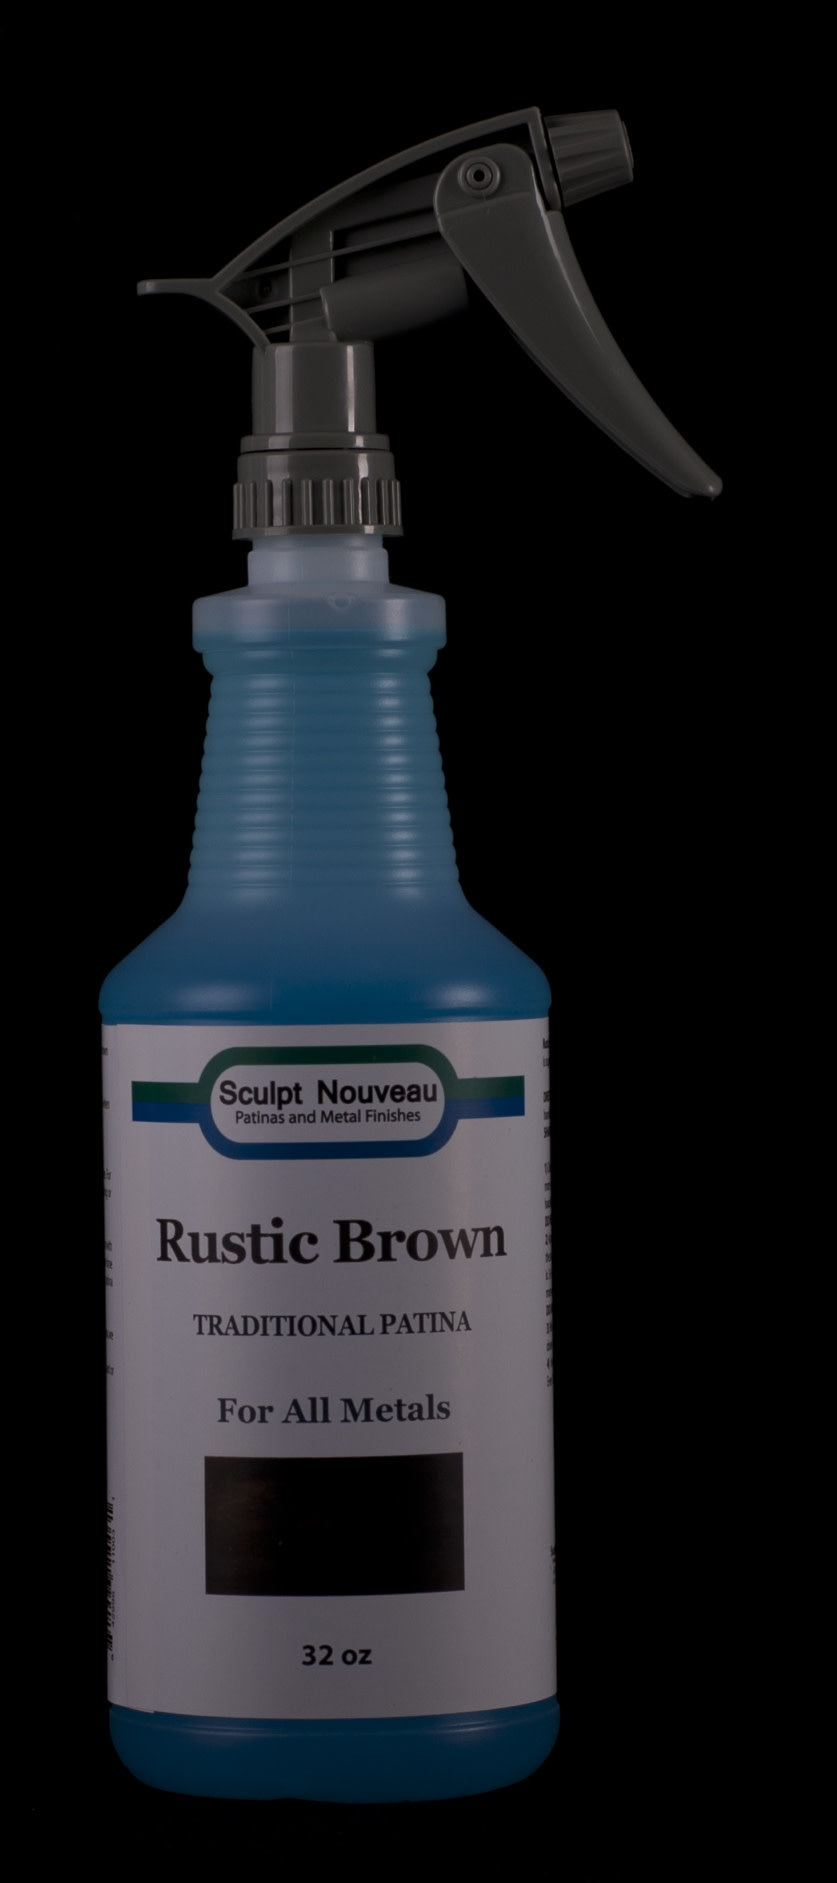 Traditional Rustic Brown Patina